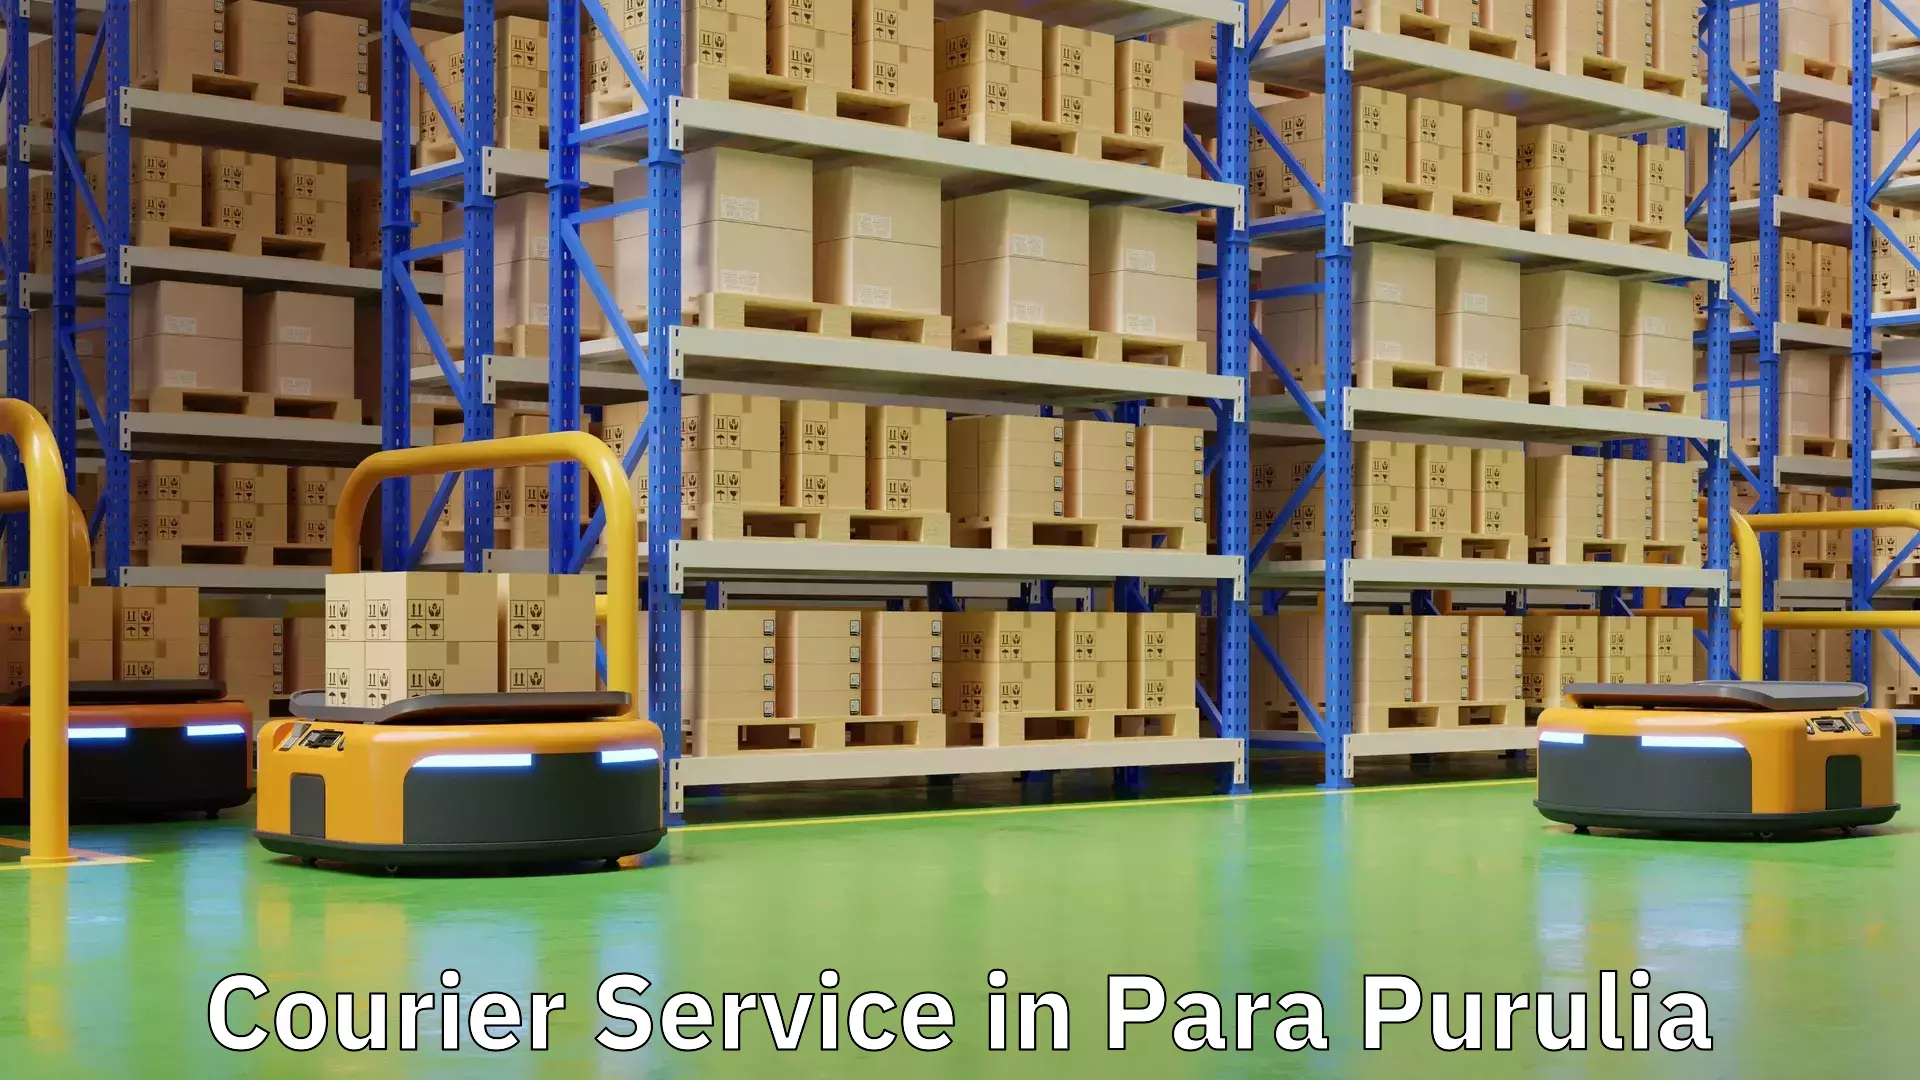 Courier service partnerships in Para Purulia